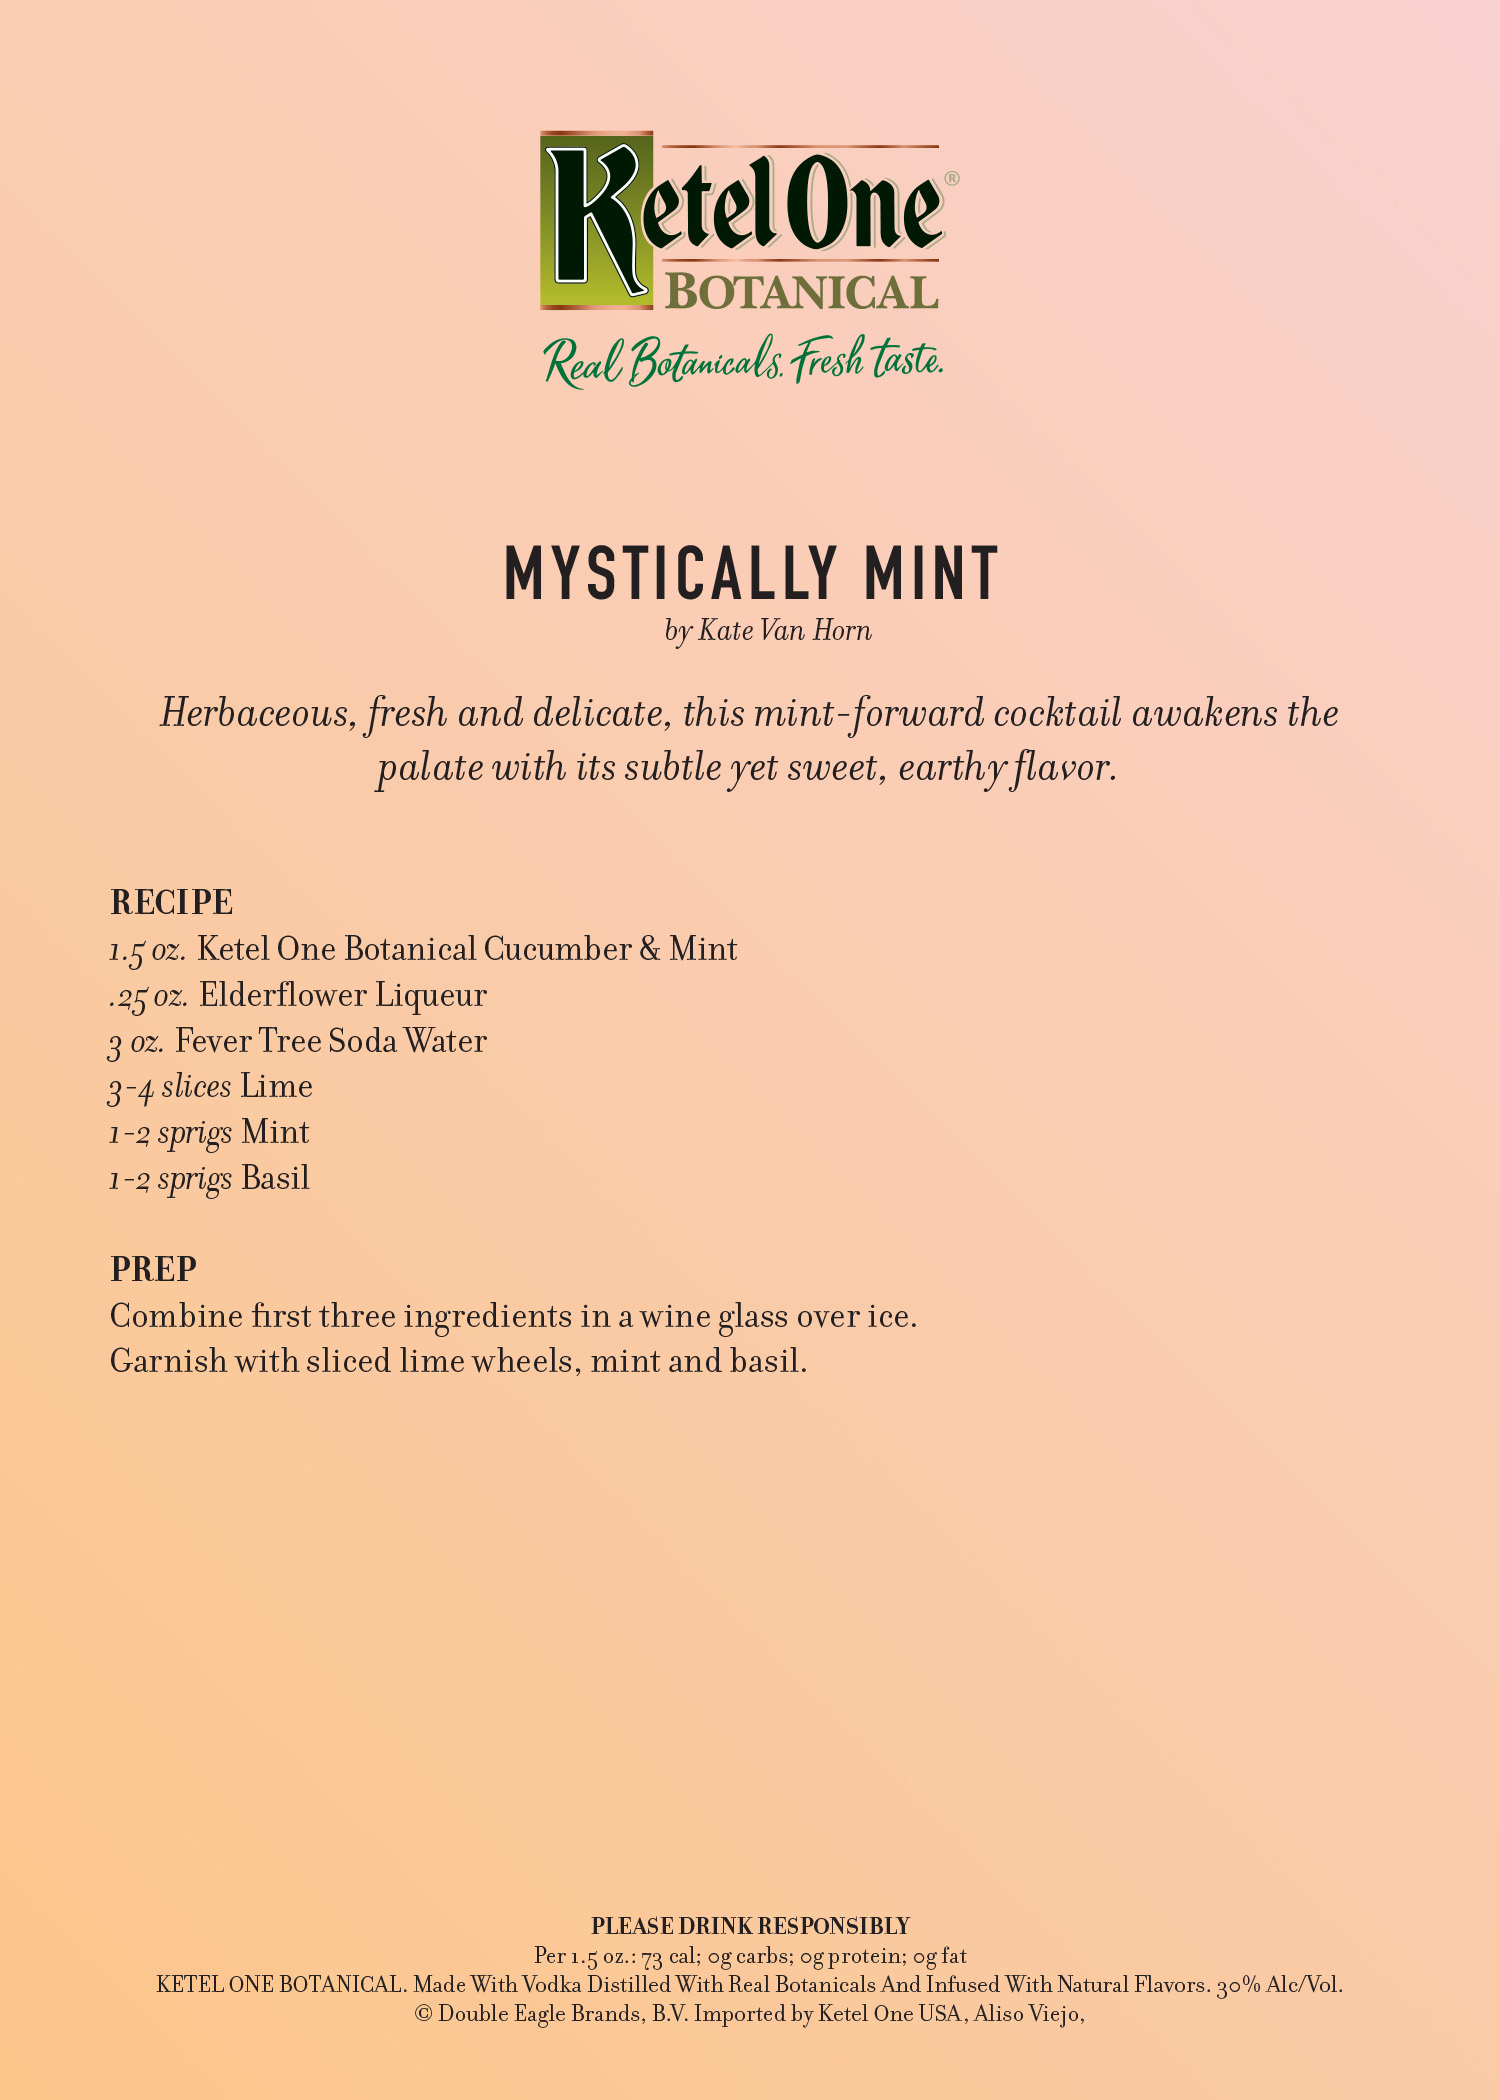 Mystically Mint by Kate Van Horn